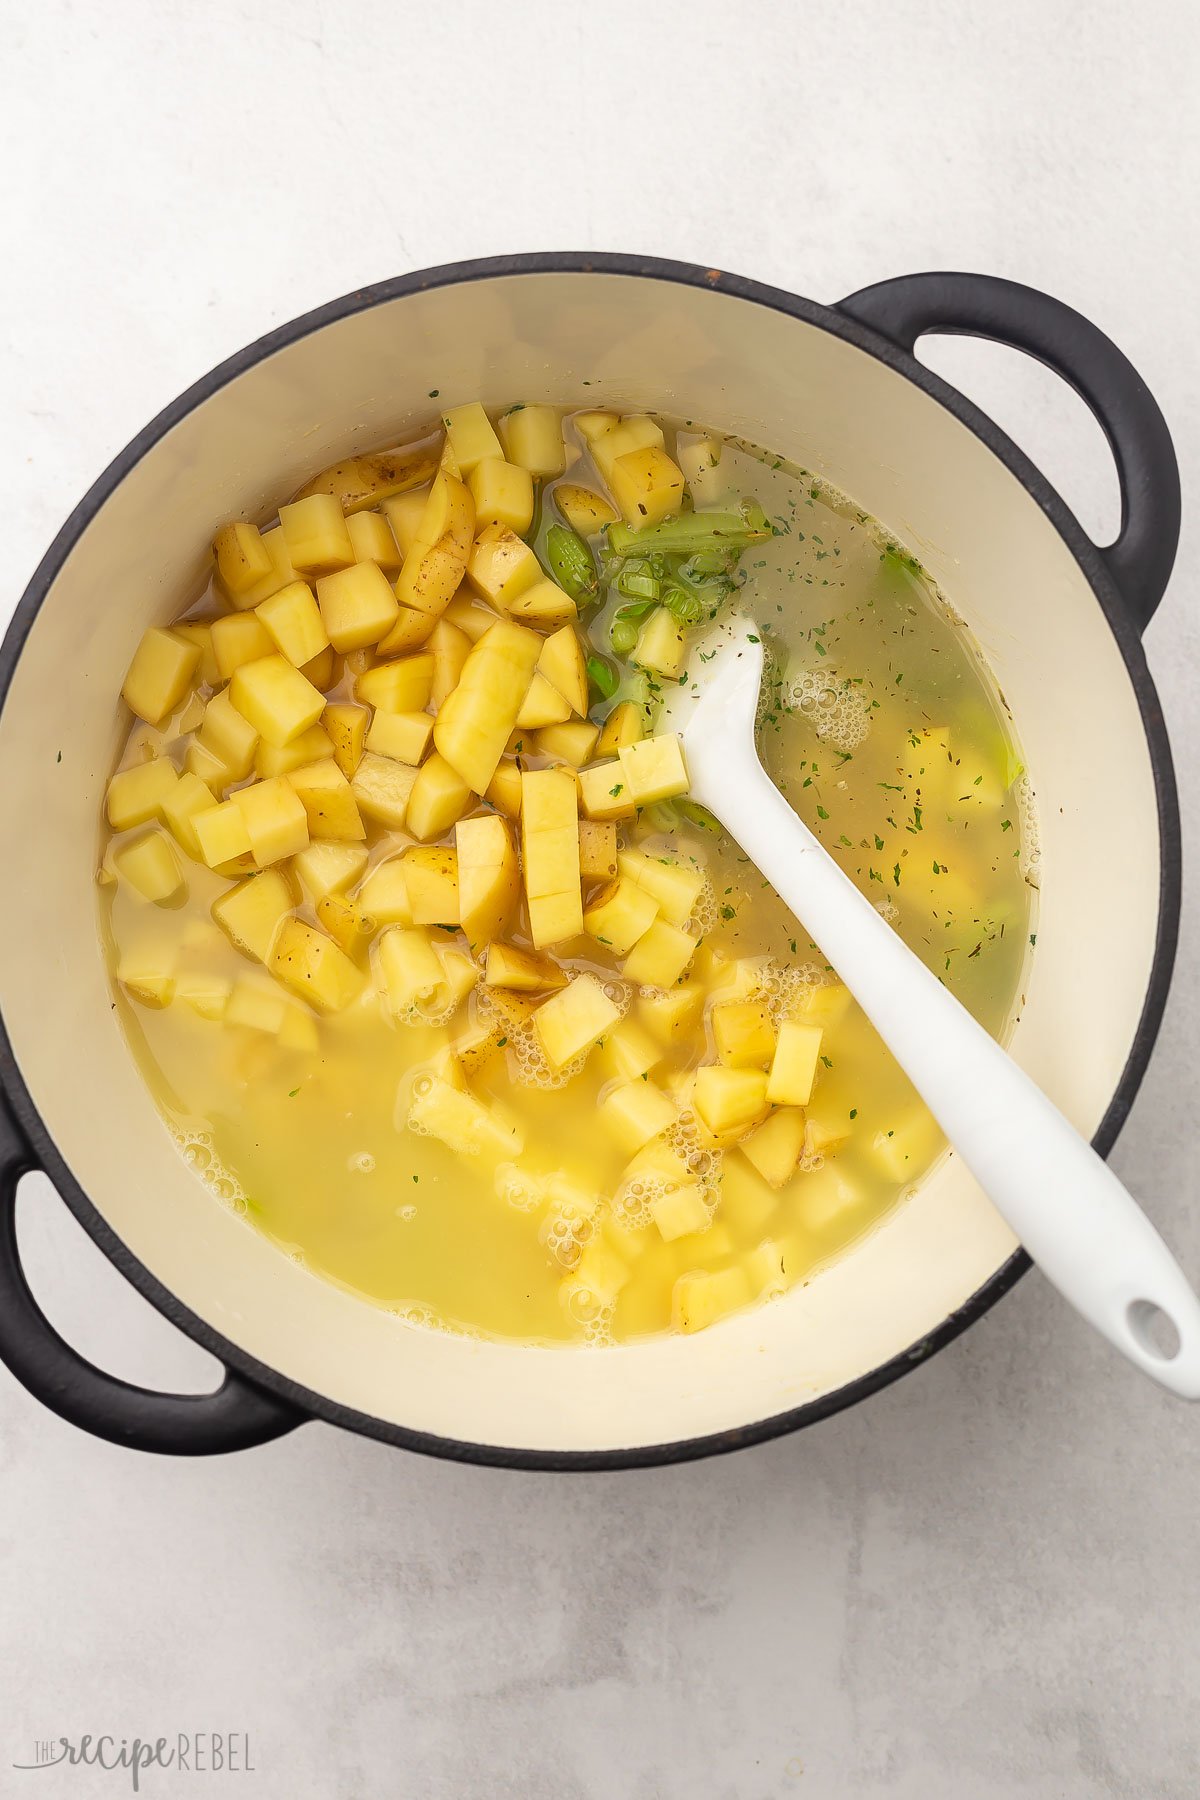 a large pot of uncooked potato leek soup ingredients.